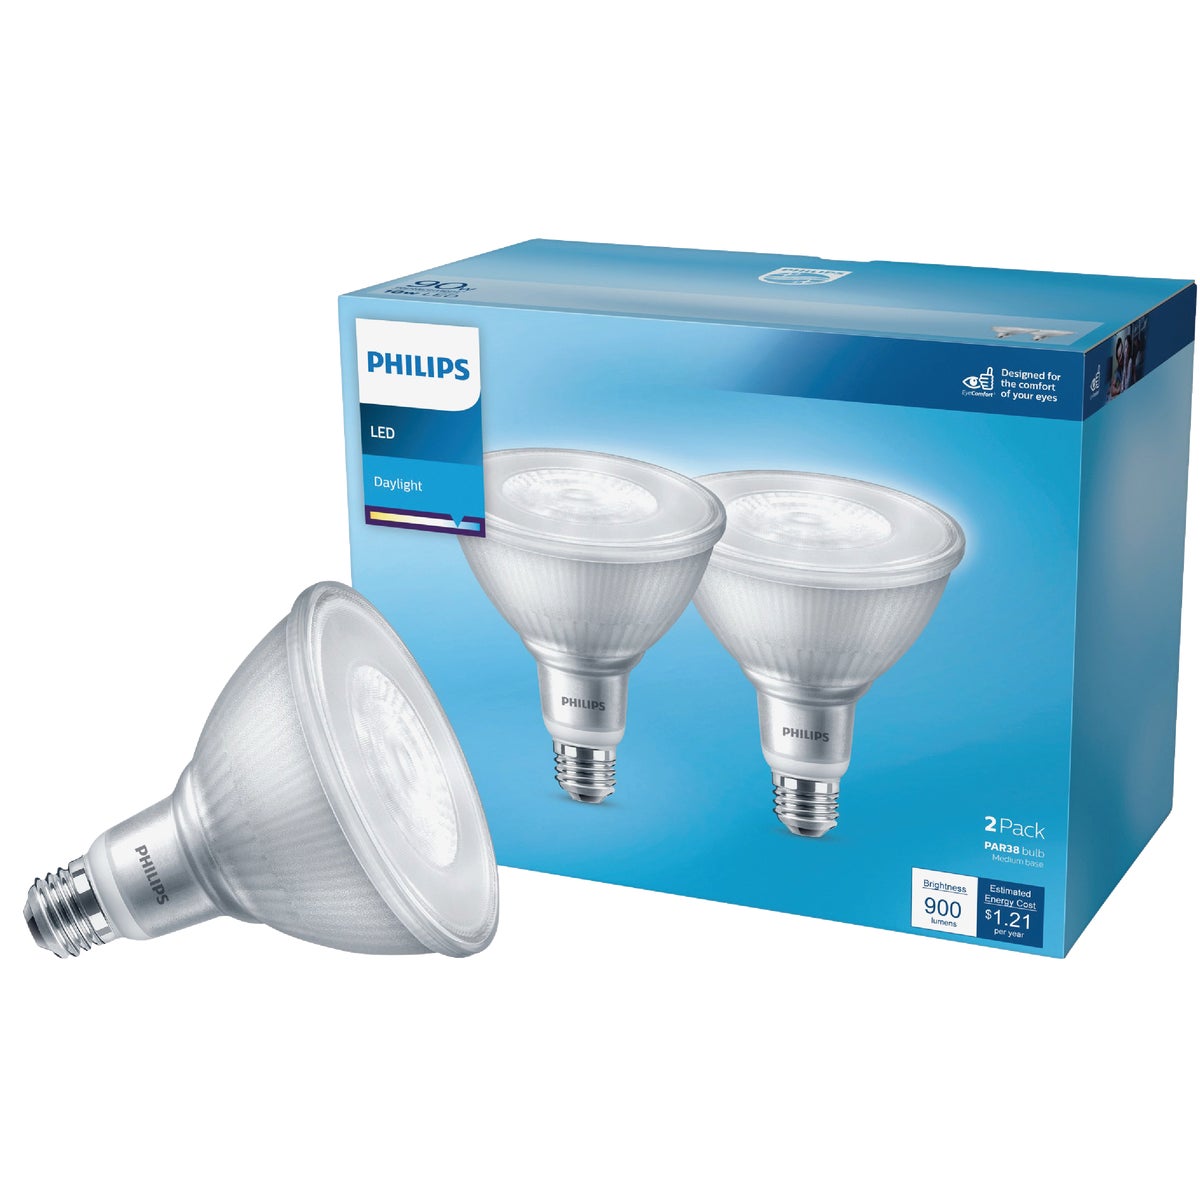 Philips 90W Equivalent Daylight PAR38 Medium LED Floodlight Light Bulb (2-Pack)